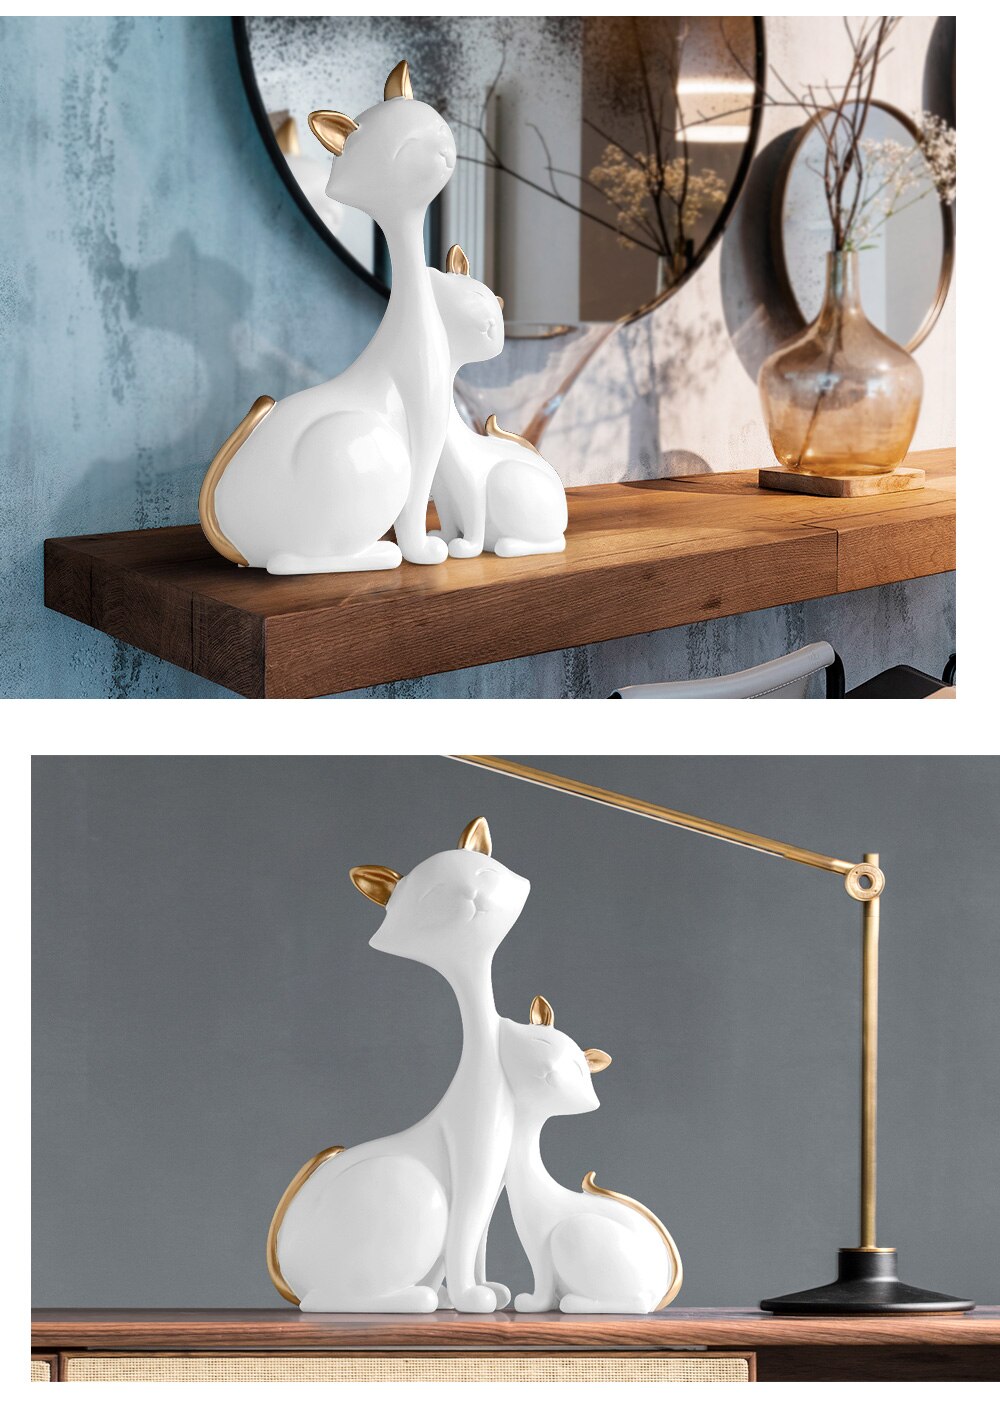 [MGT] Cat Figurines iniatures Decorative Animals desktop gift cat statue ornaments home decoration casa living room accessories